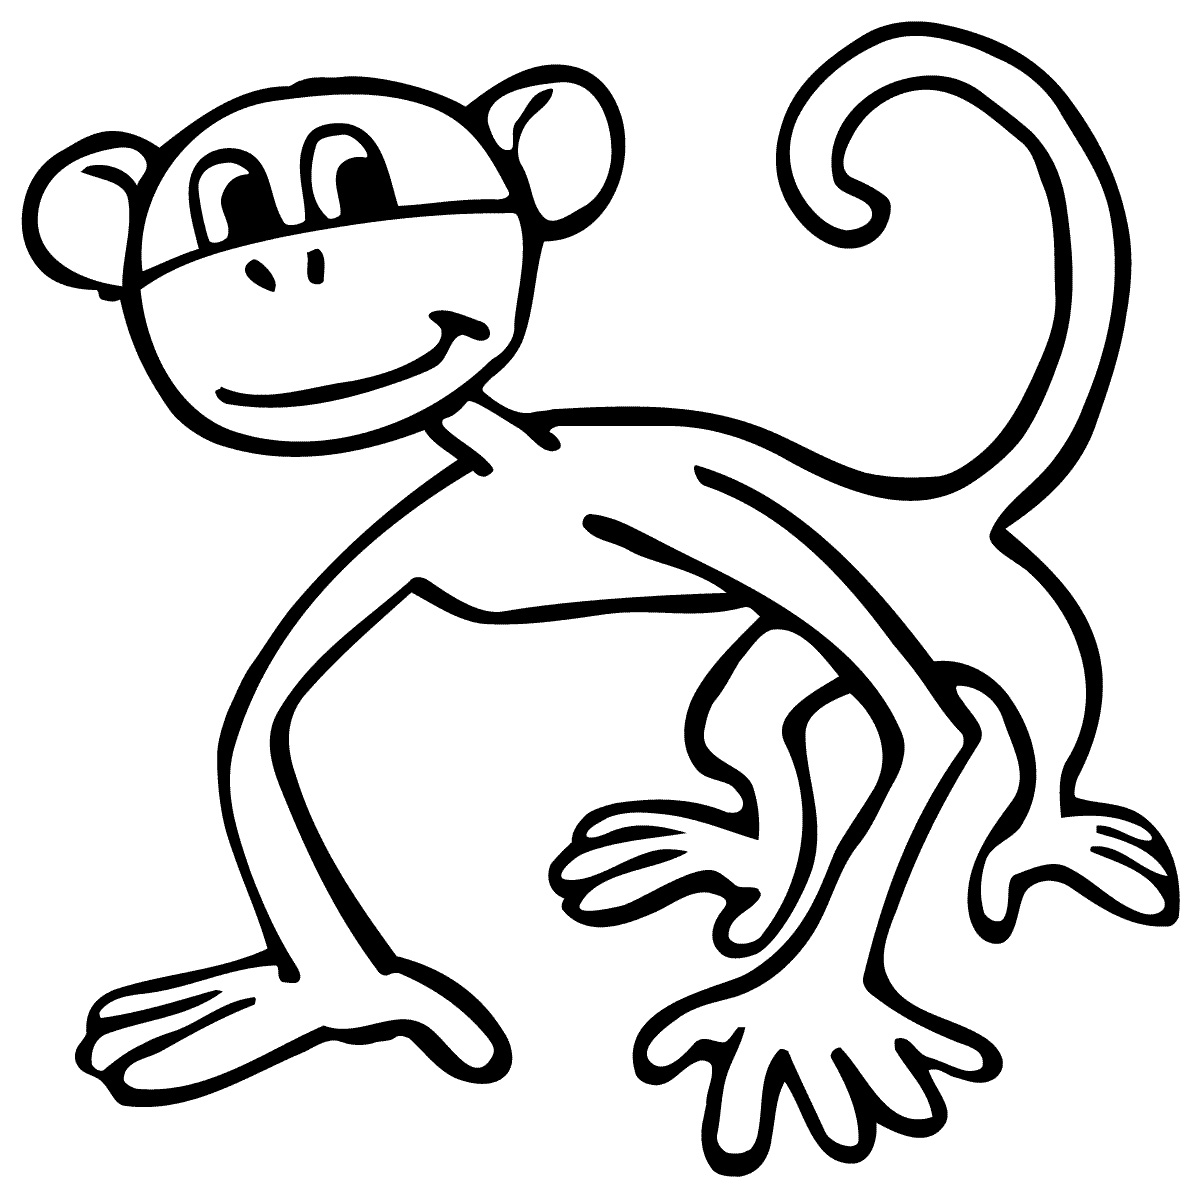 Cartoon spider monkey | www.fifaedu.com coloring pages garden 